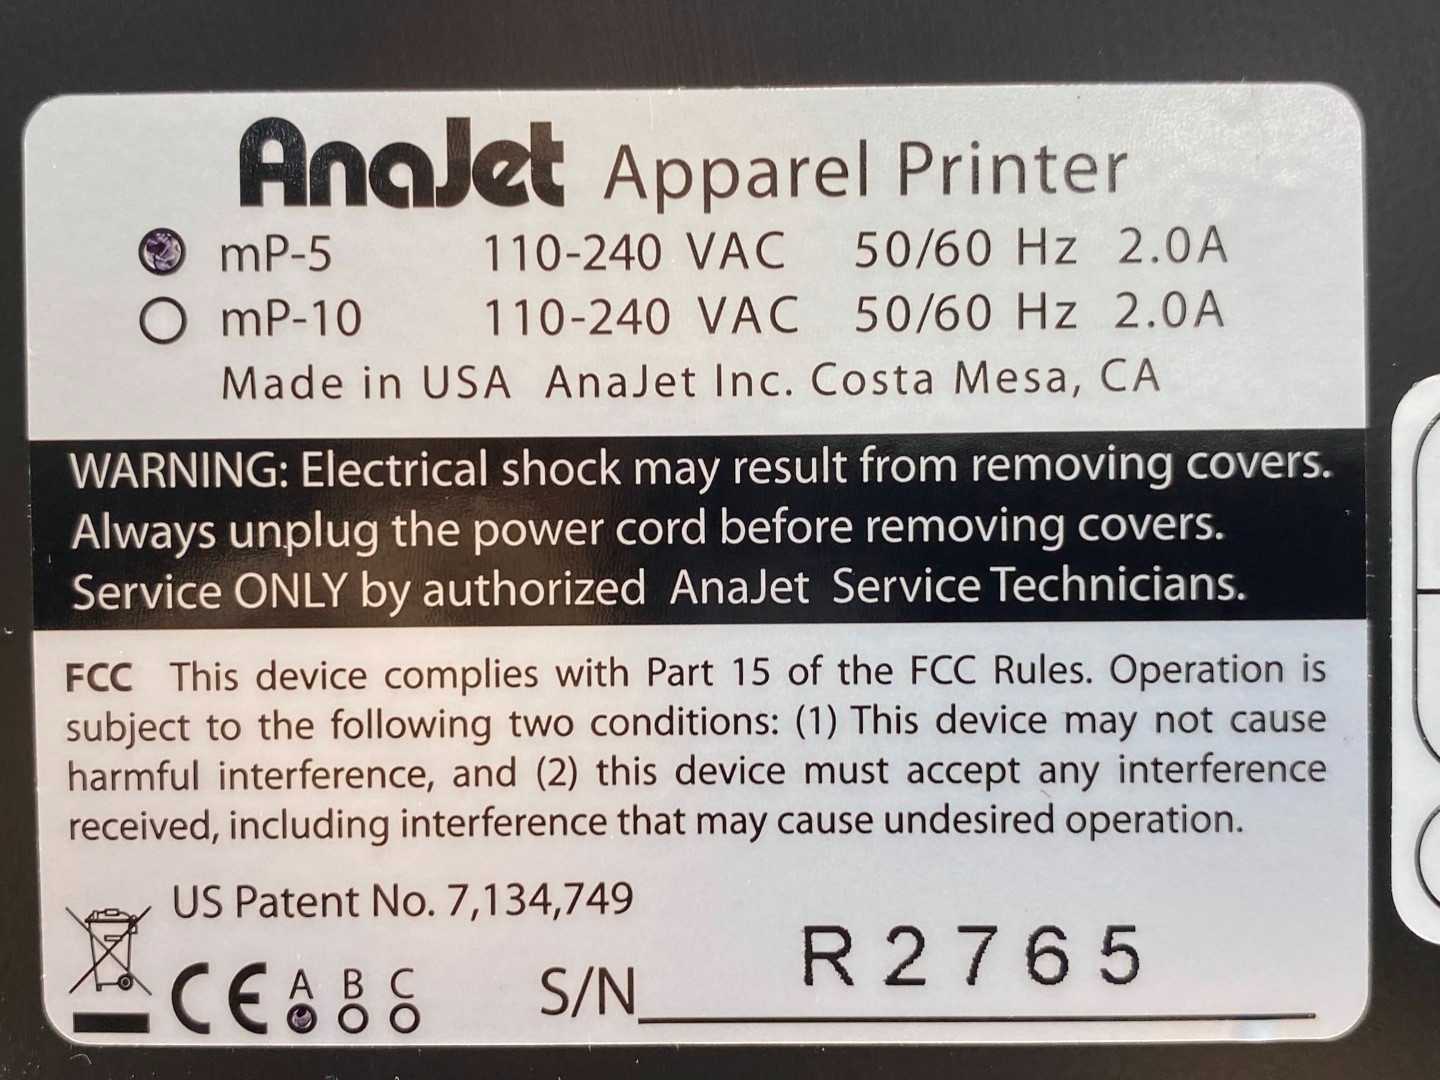 AnaJet mPower Digital Apparel Printer MP5